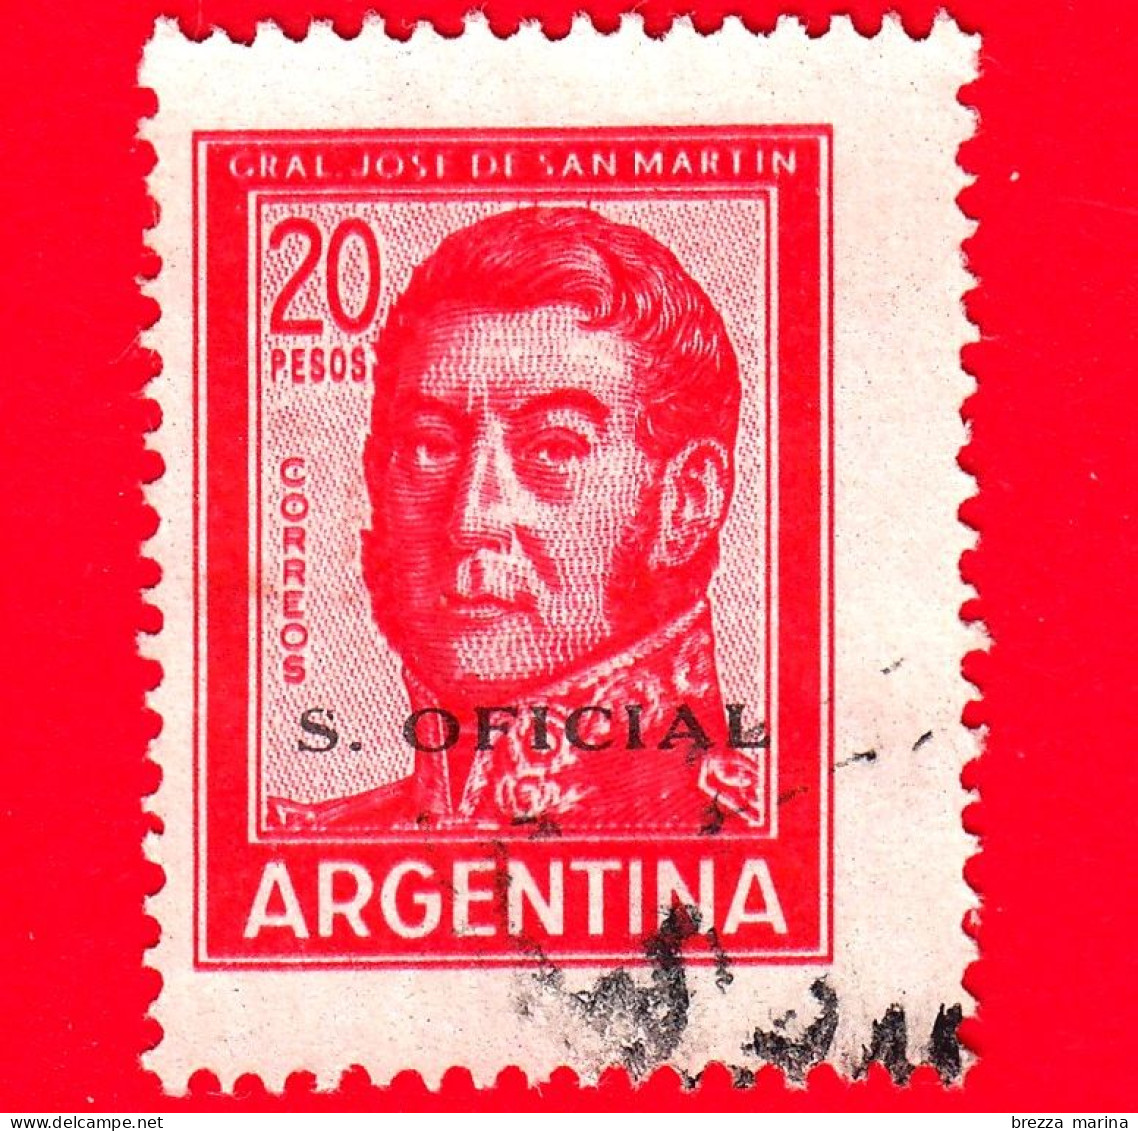 ARGENTINA - Usato -  1969 - General José Francisco De San Martin (1778-1850) - 20 - Sovrastampato S. OFICIAL - Usati